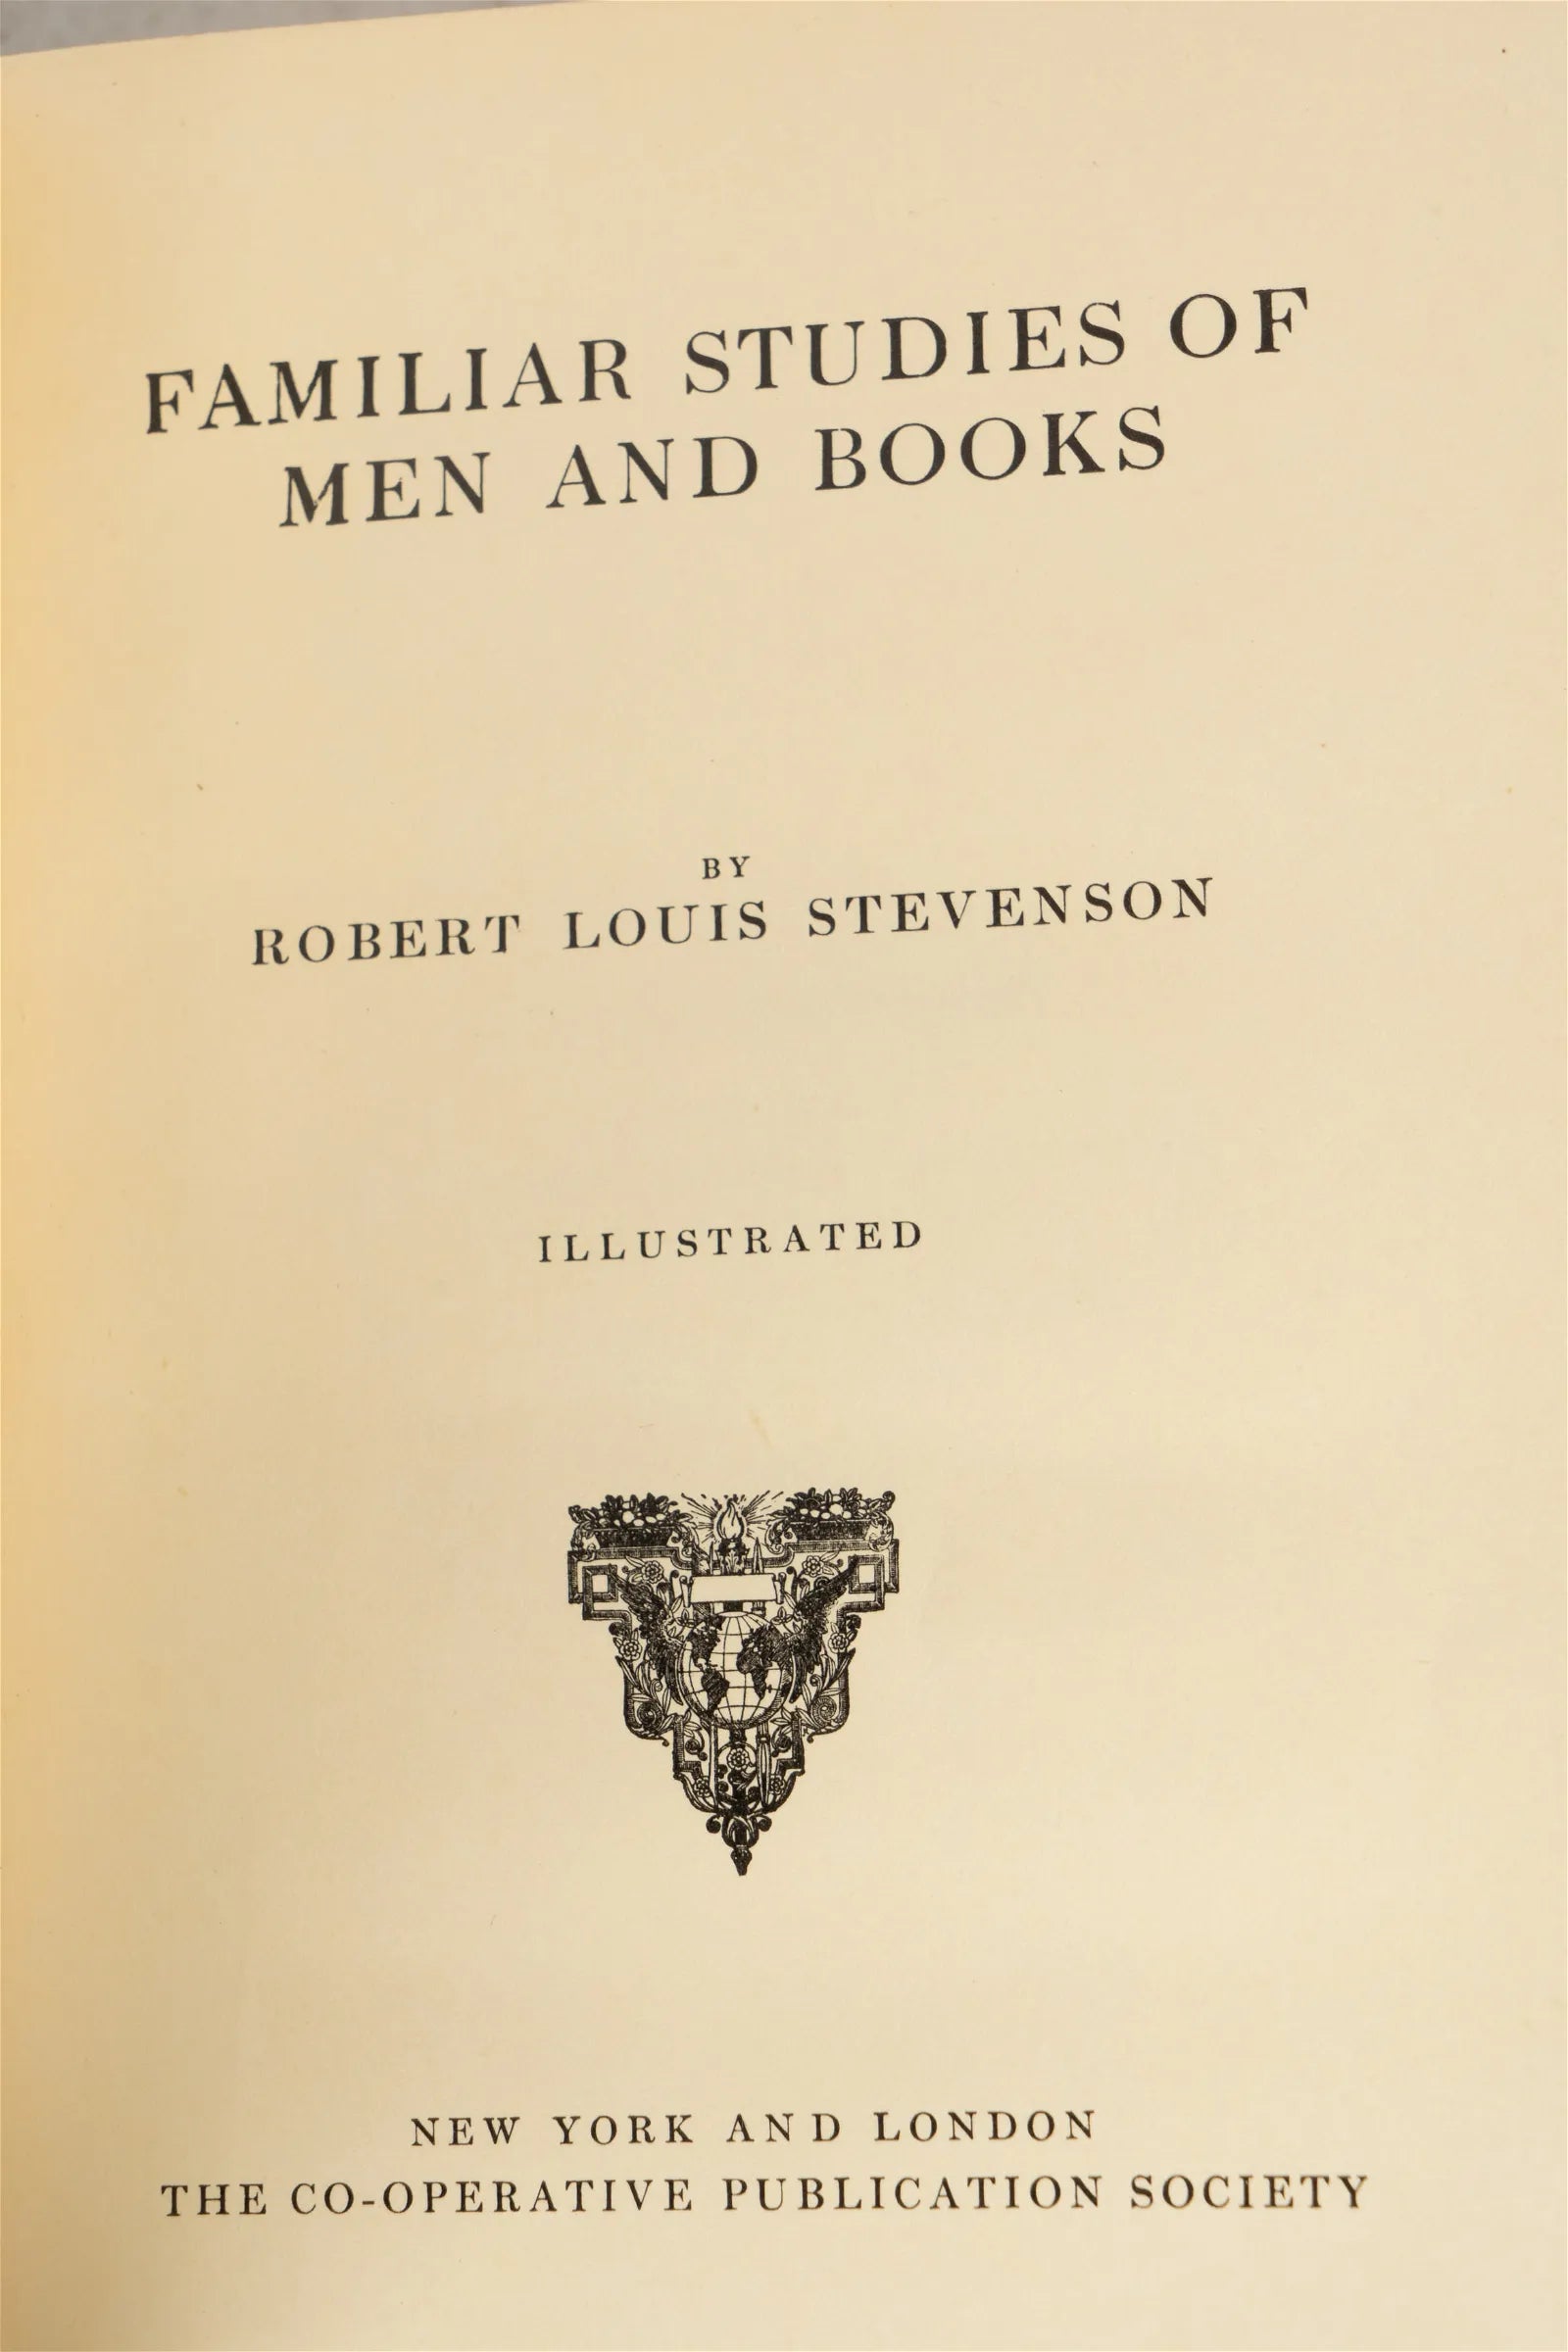 DA8-002: Late 19th C Leather Bound Works of Robert Louis Stevenson (8 Volumes)